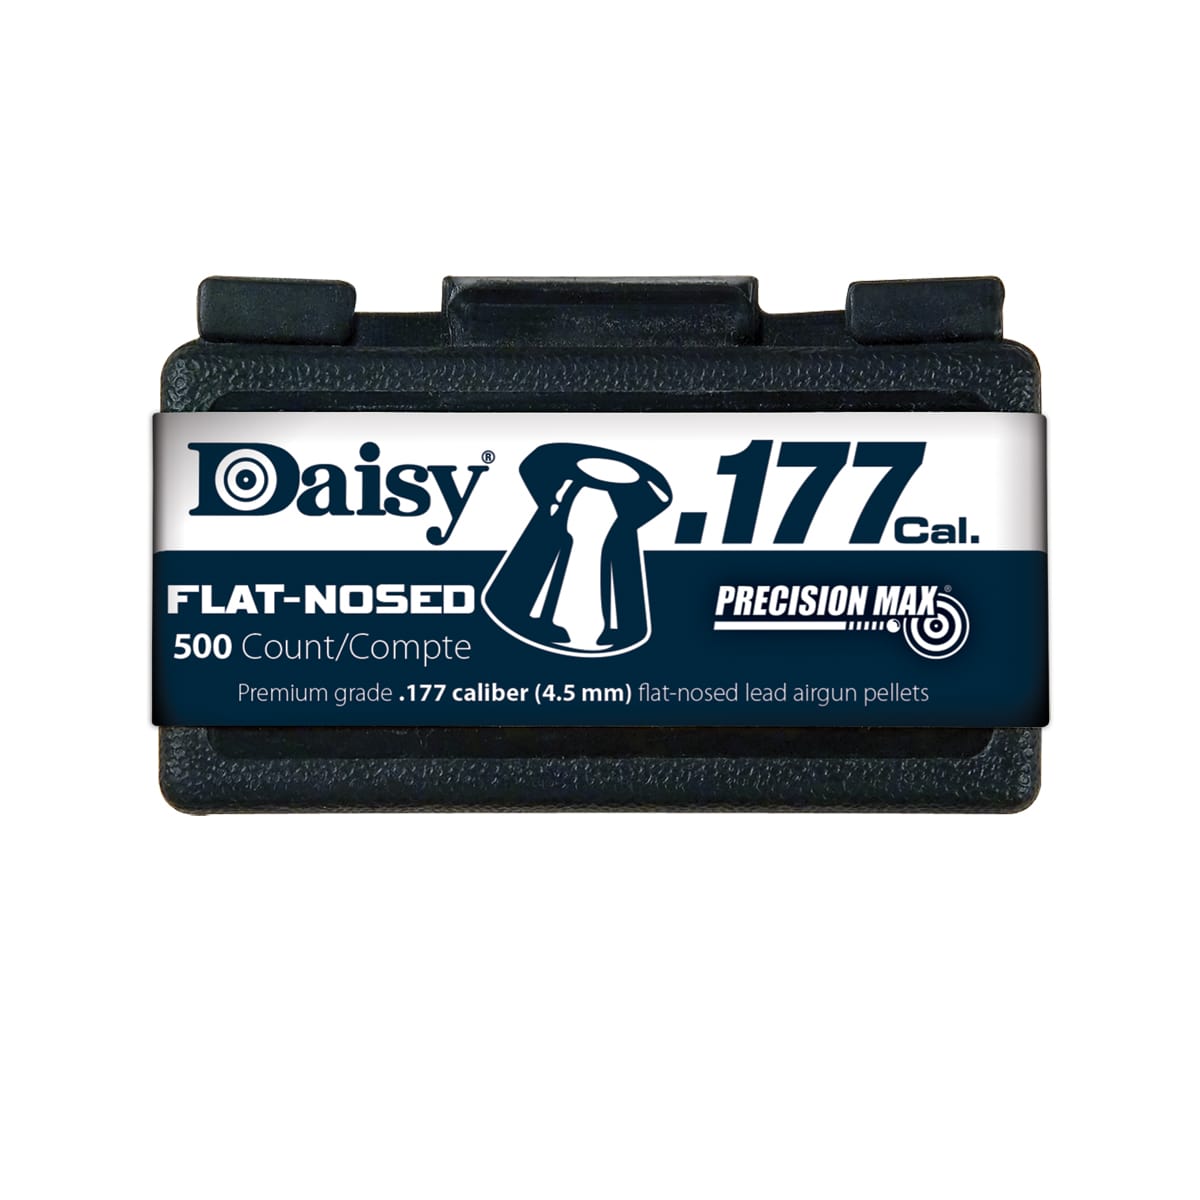 for sale online 500 Count Daisy 577 Premium .177 Caliber Flat-nosed Lead Airgun Pellets 